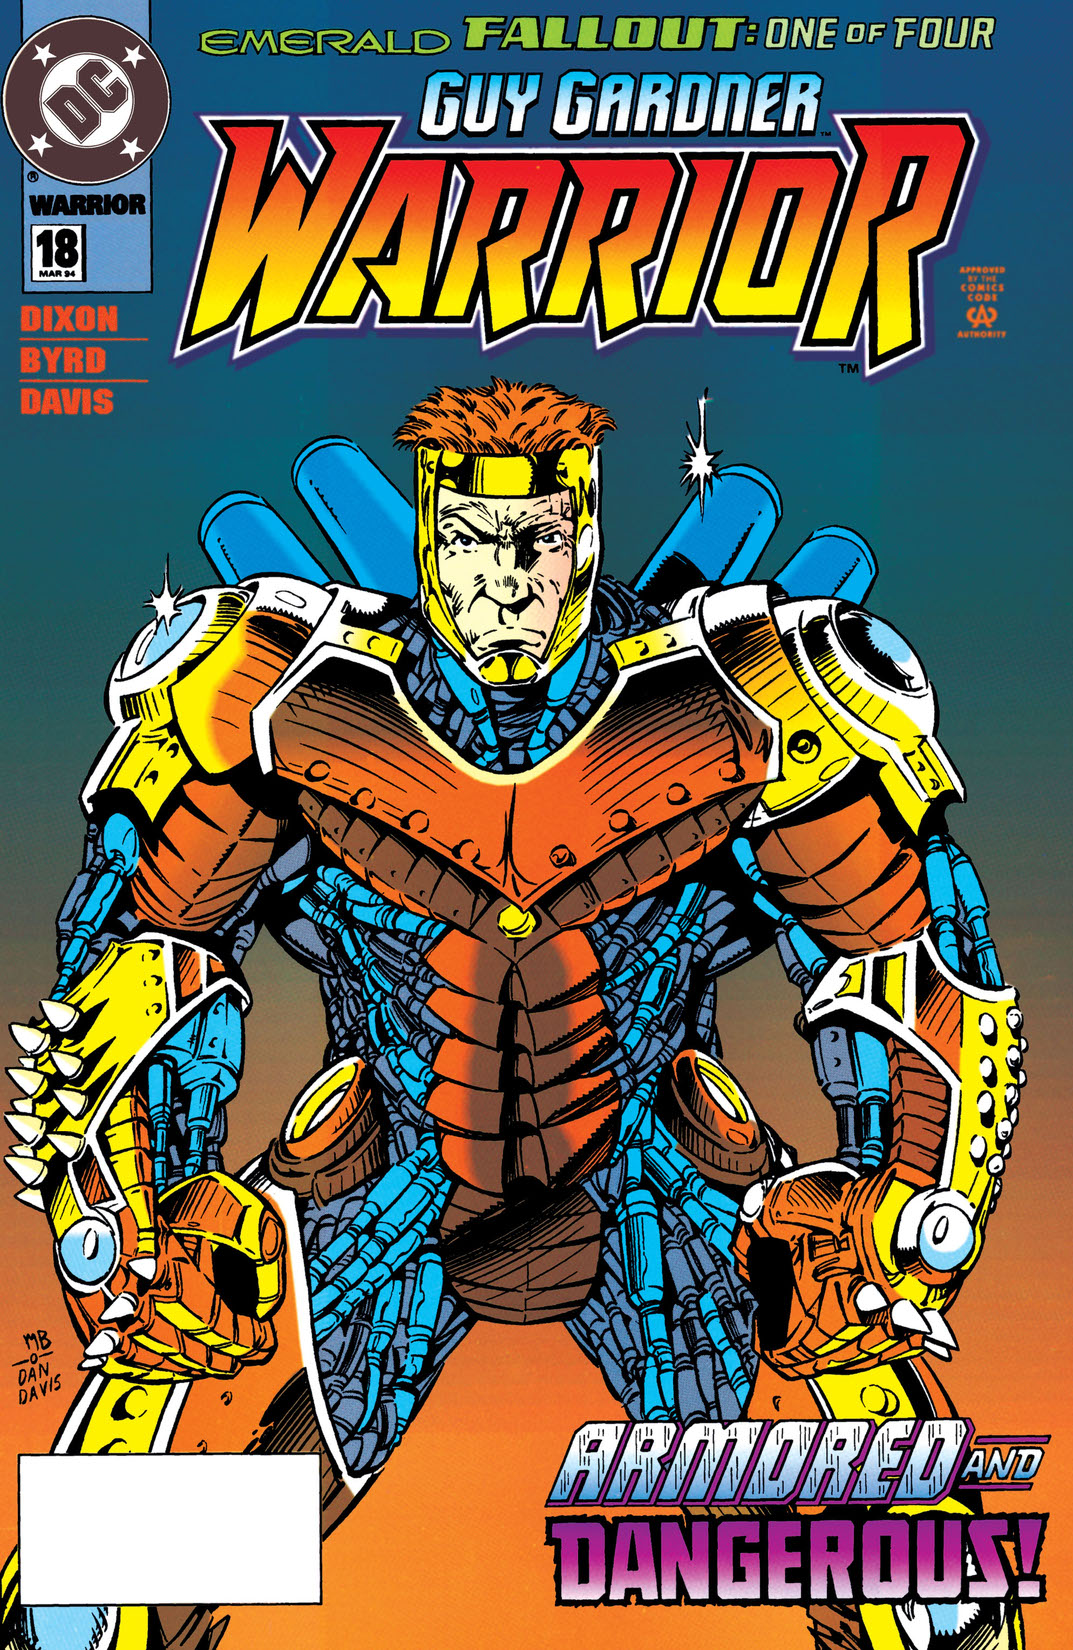 Guy Gardner: Warrior #18 preview images